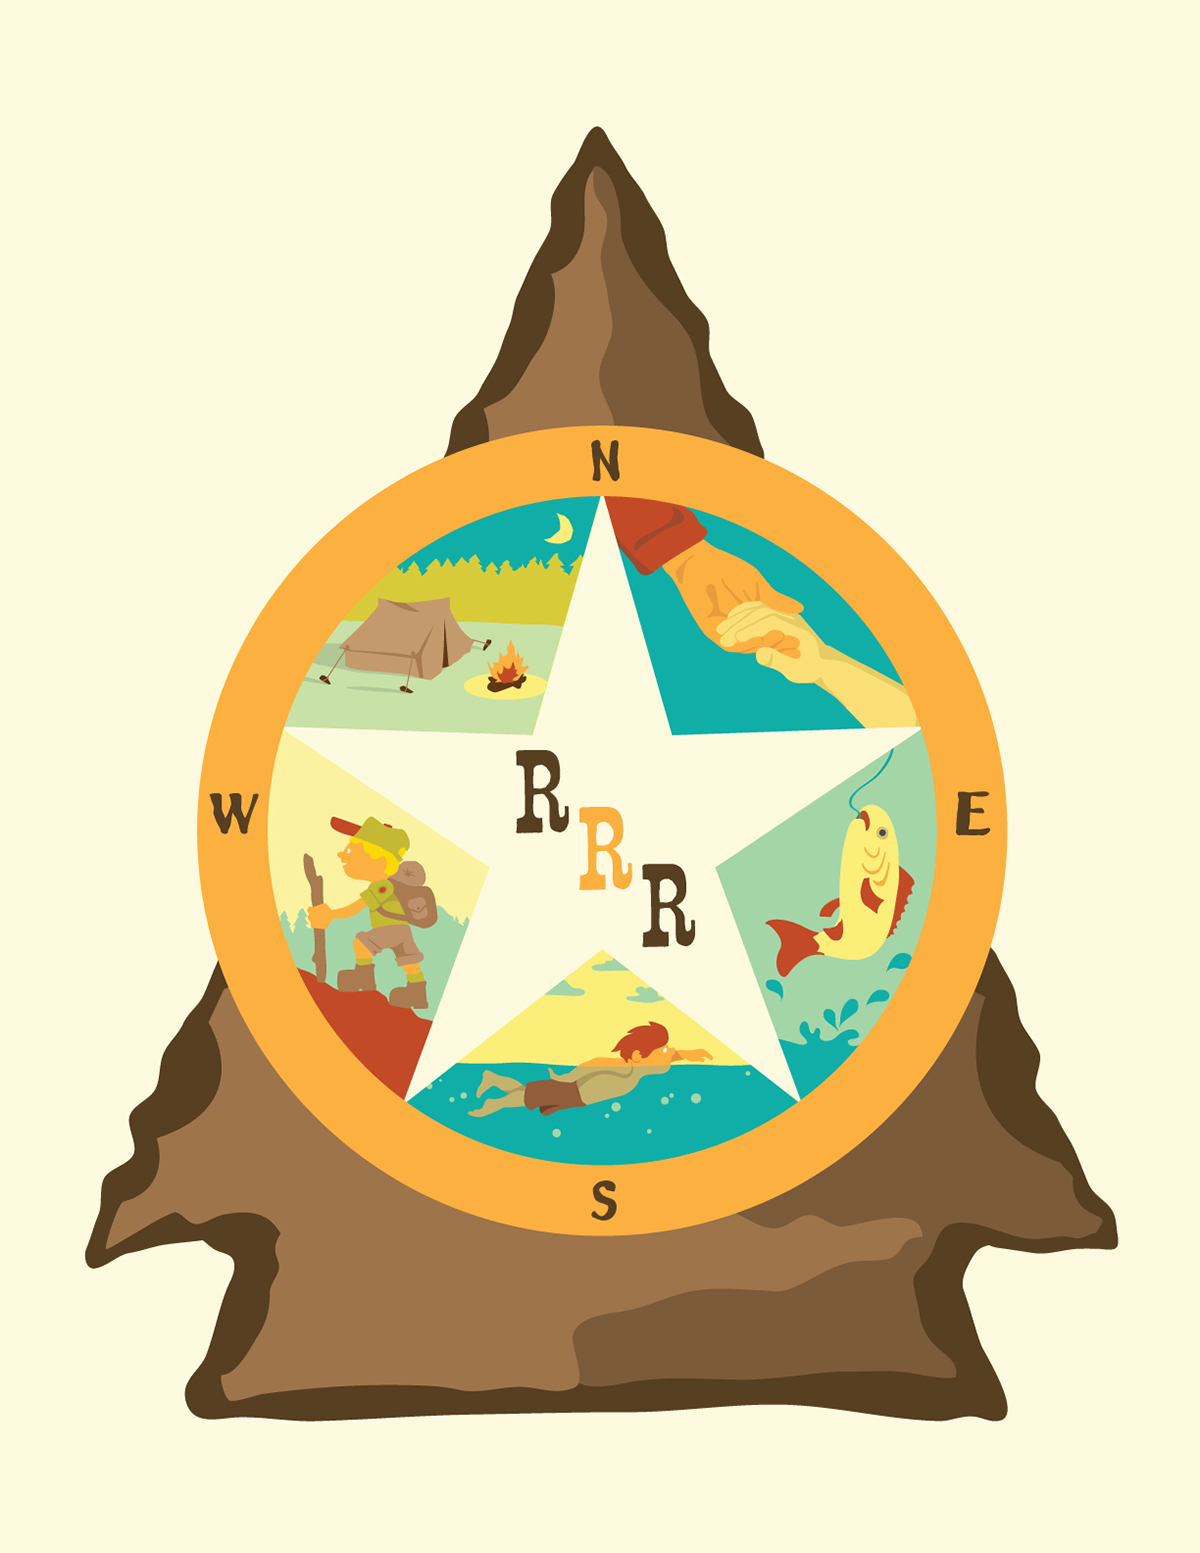 Rock River Rangers  emblem   Children's book